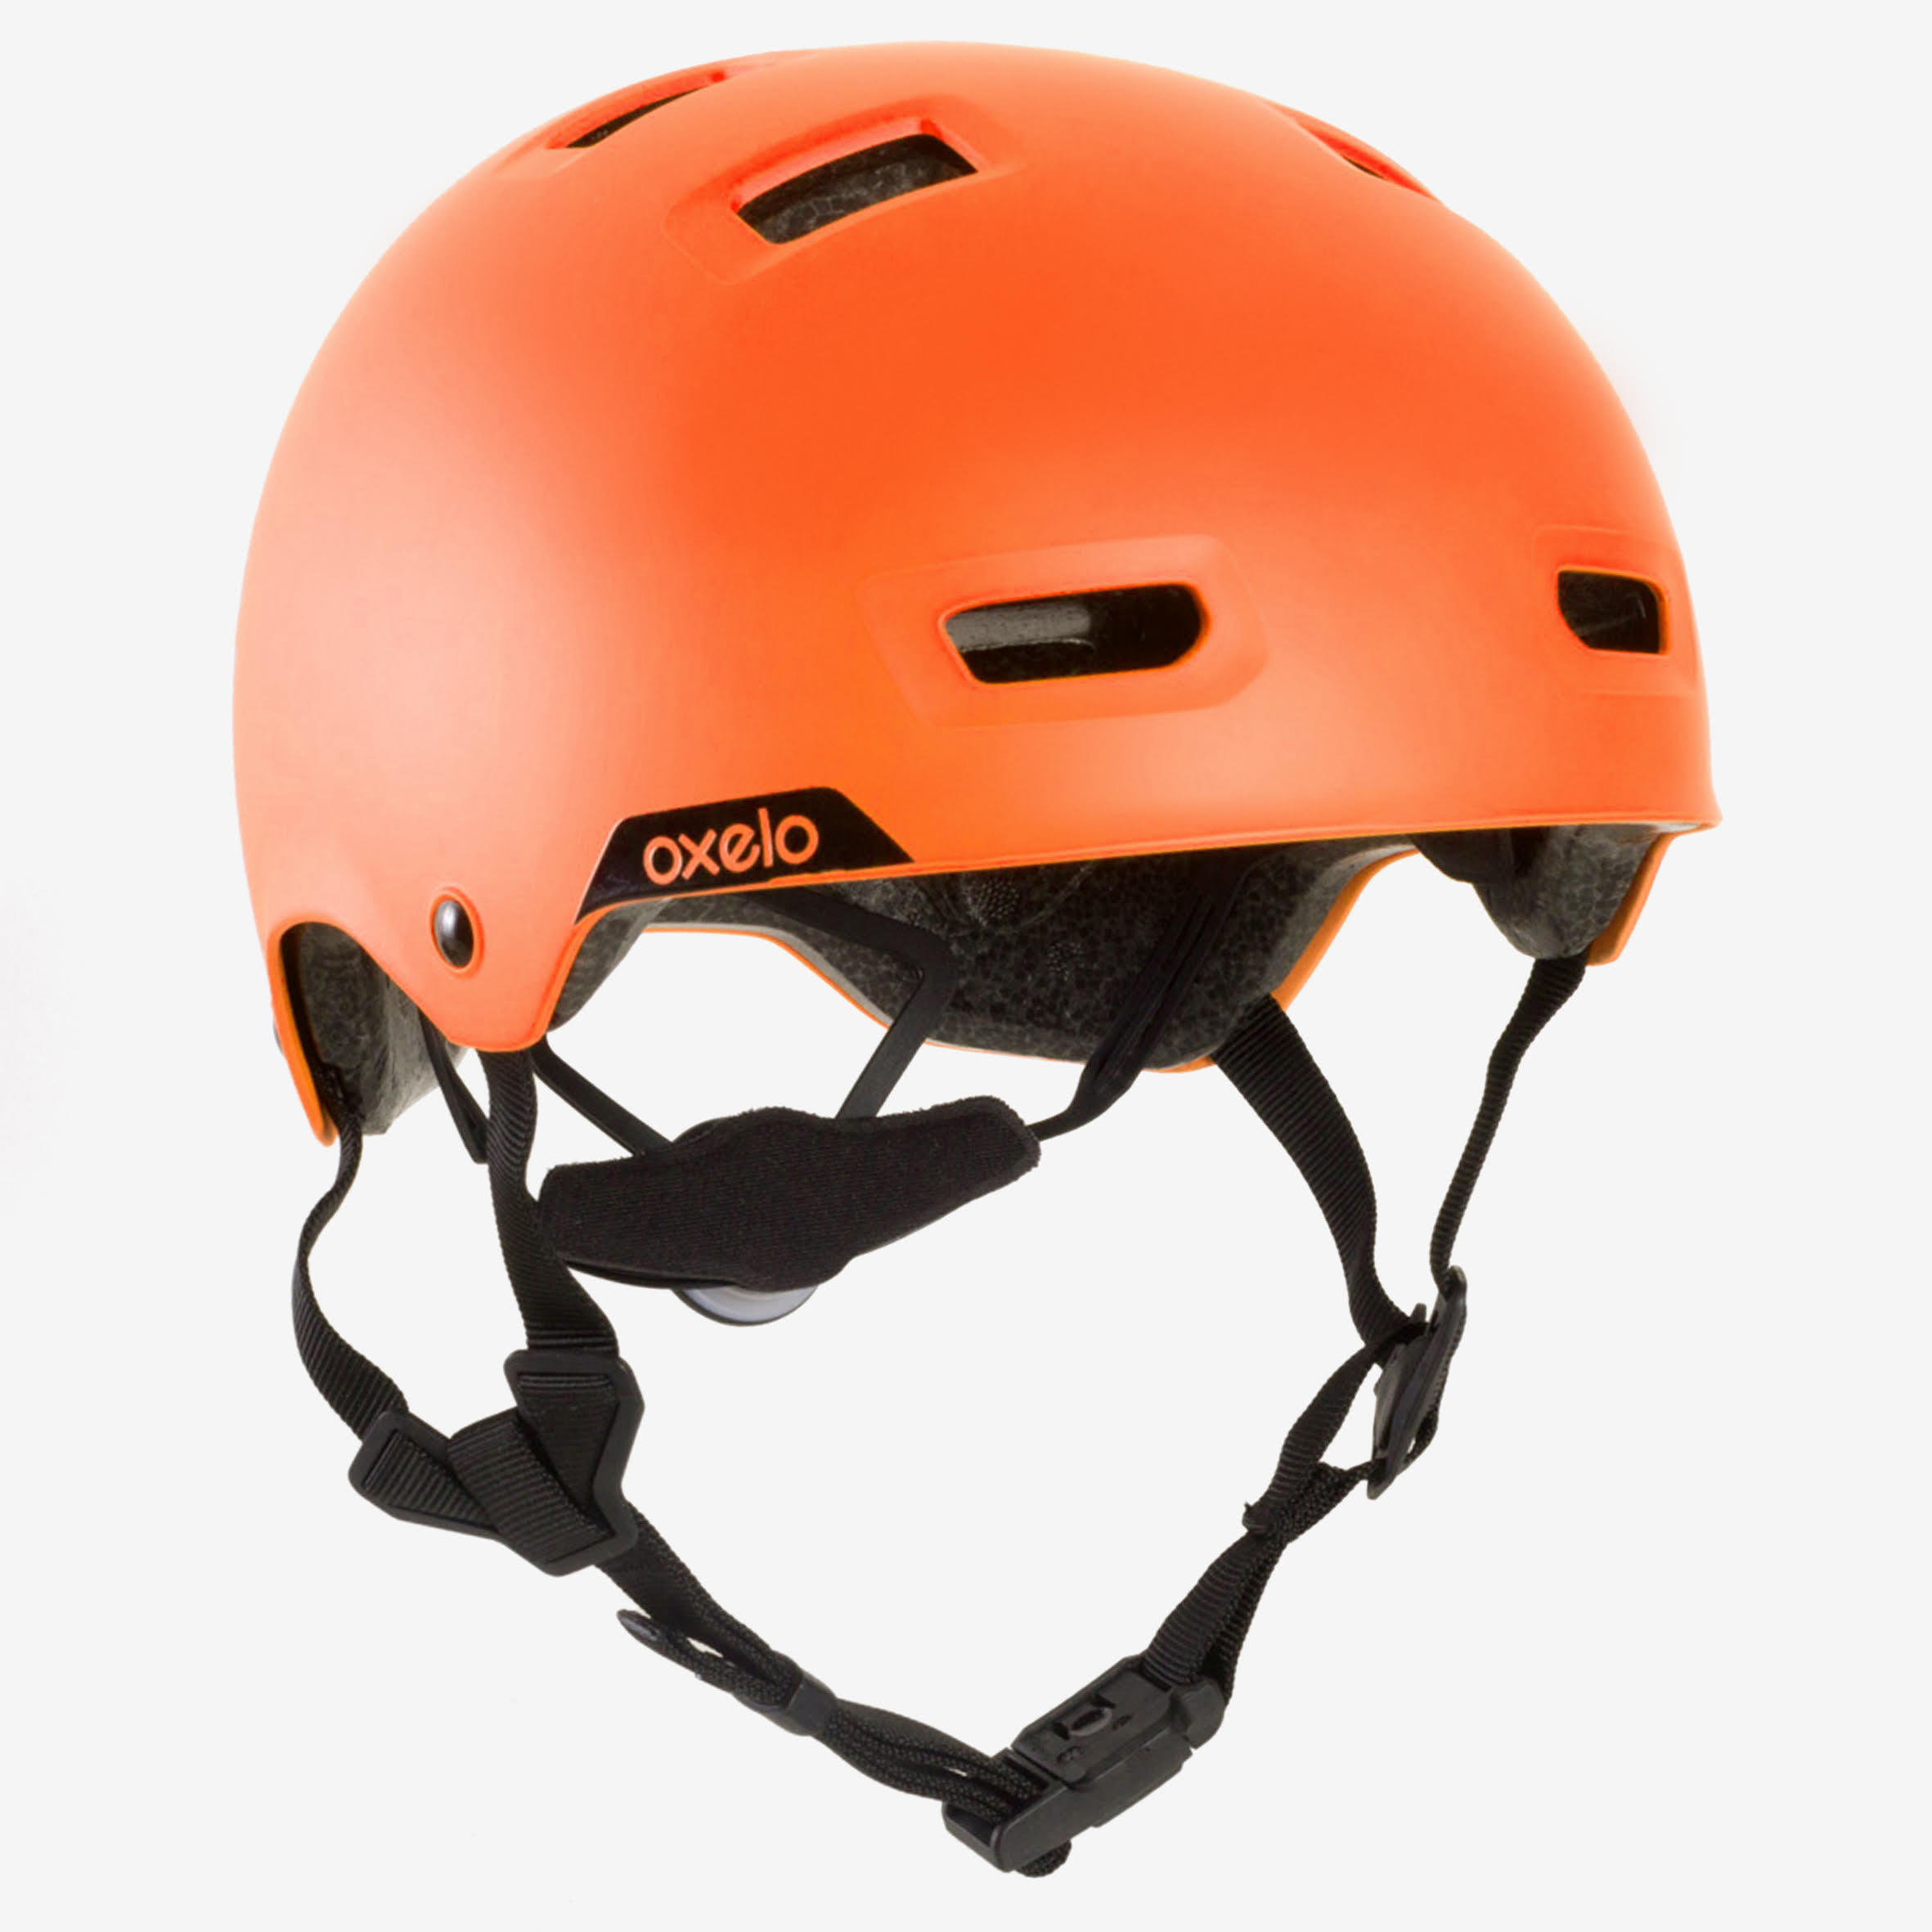 Oxelo Helmet Decathlon Hot Sale Off 58